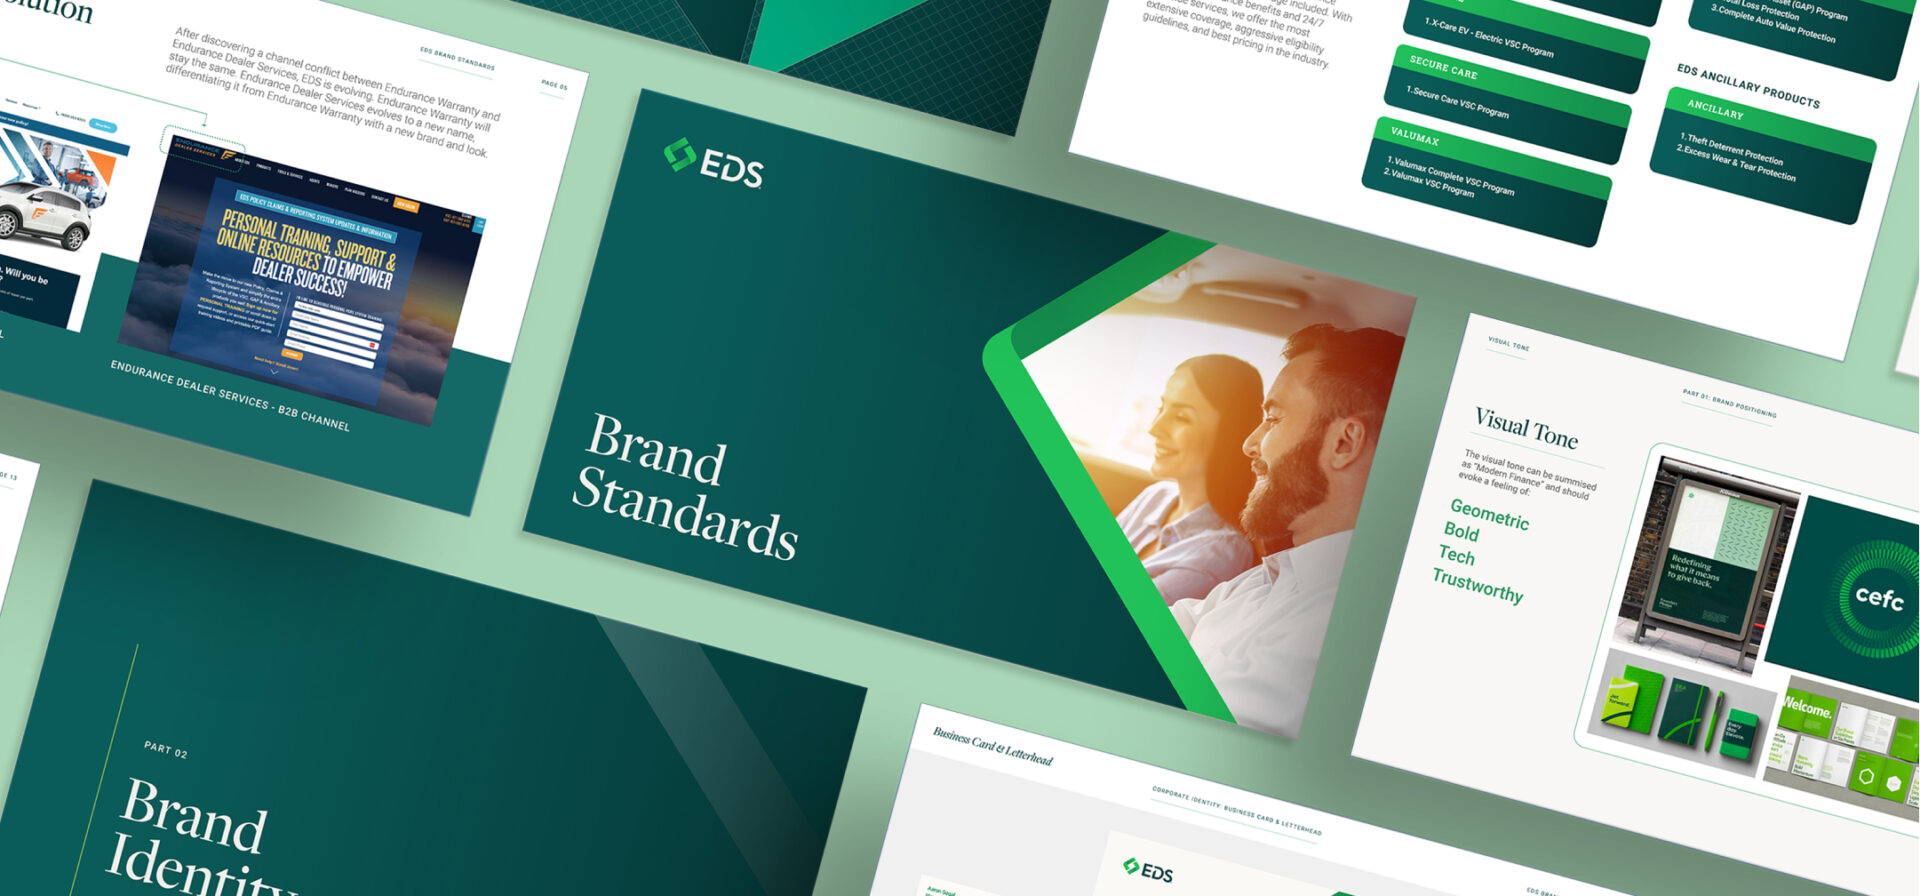 EDS_Brand Standard